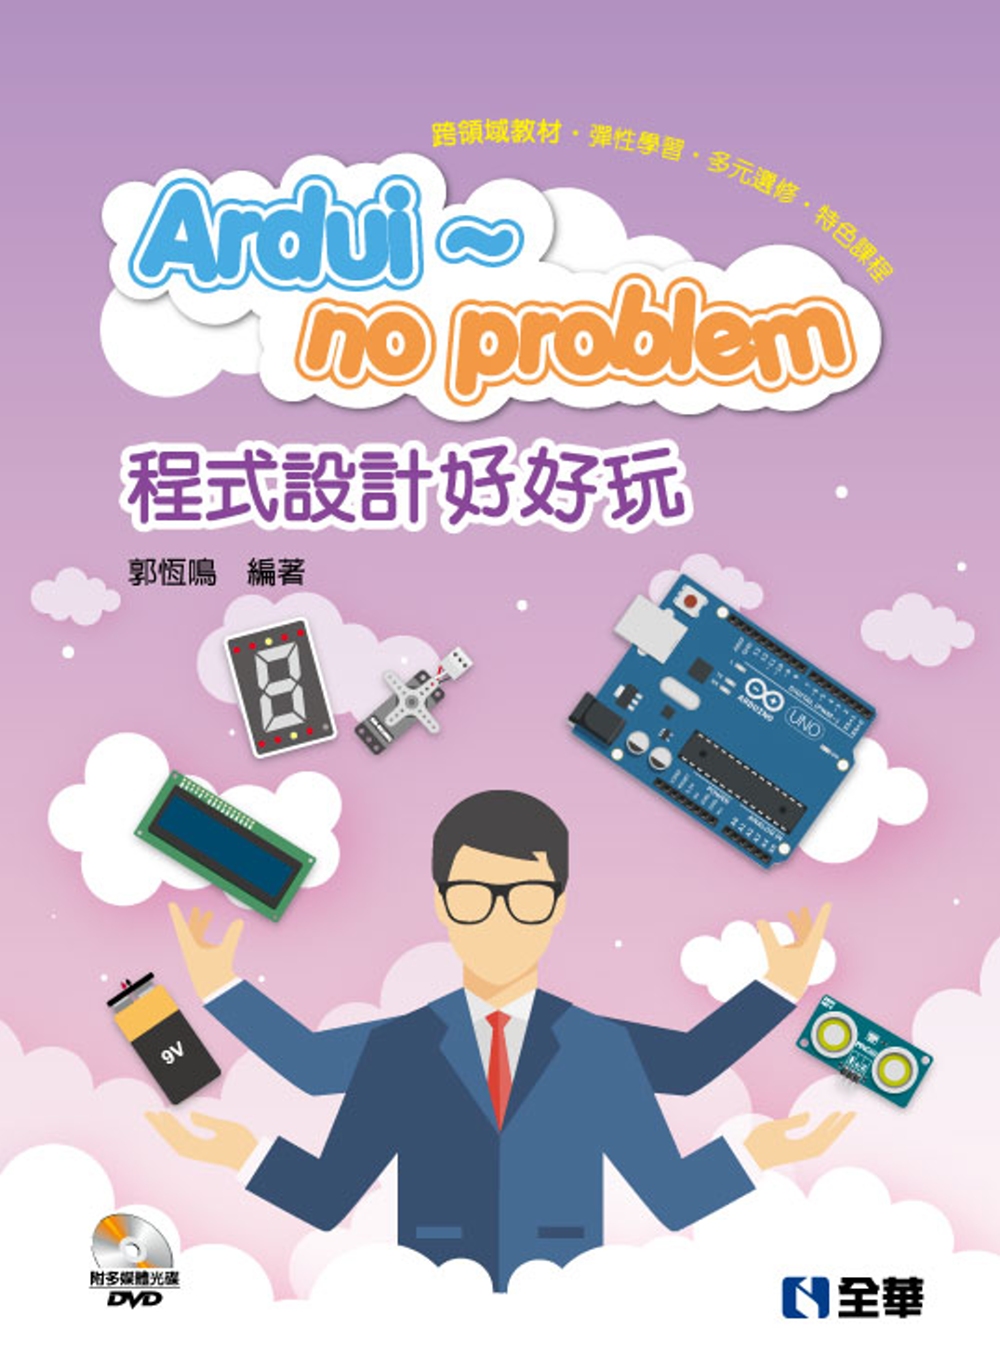 Ardui~no problem 程式設計好好玩(附Ardu...